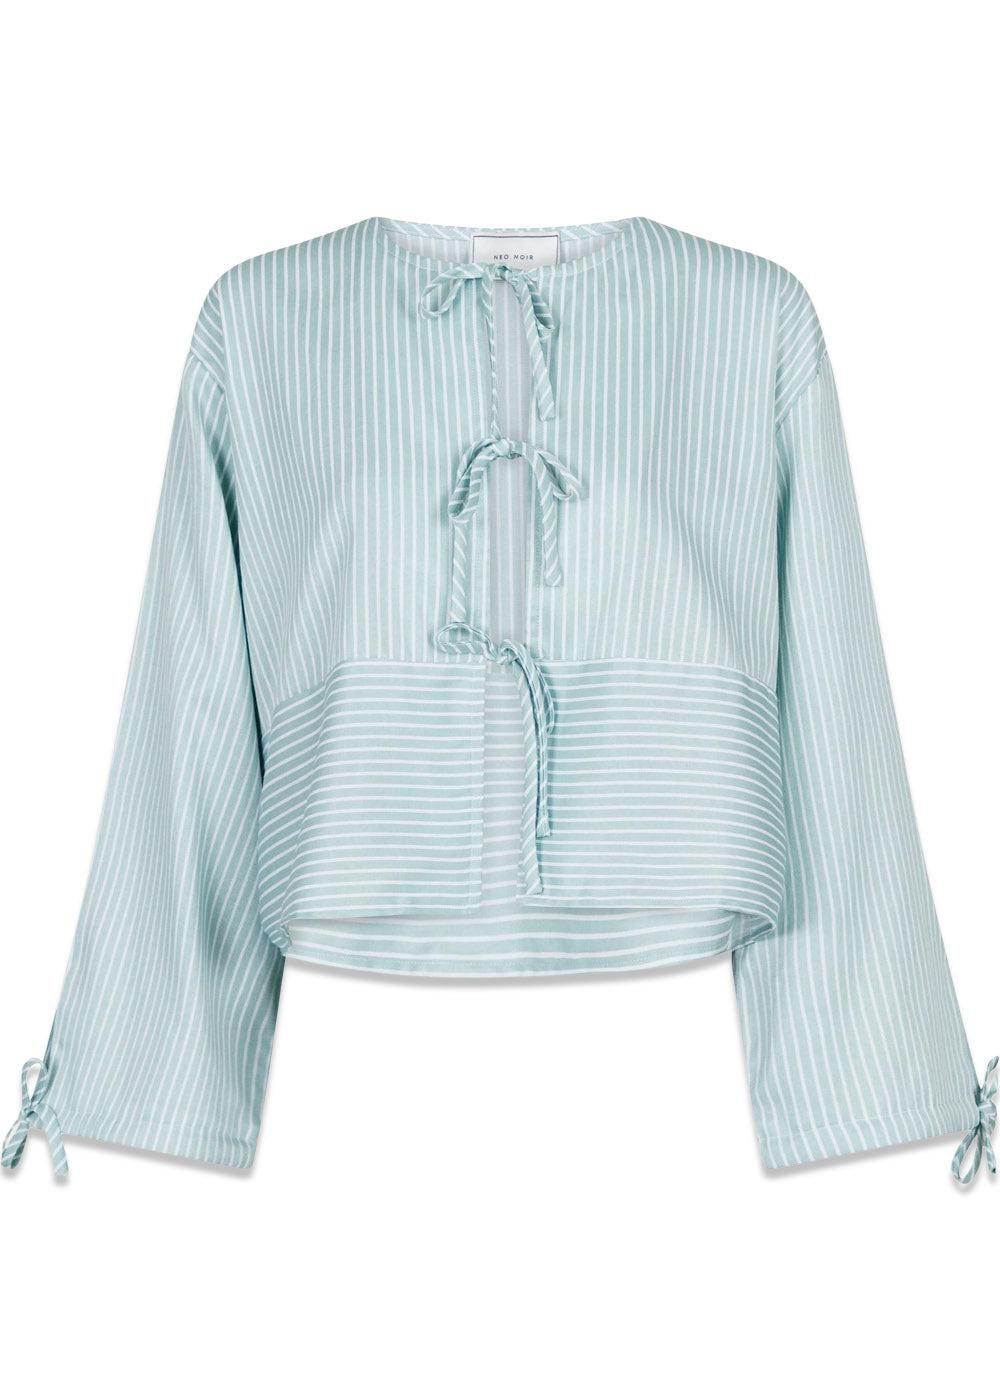 Neo Noirs Wanda Stripe Shirt - Mint. Køb blouses her.